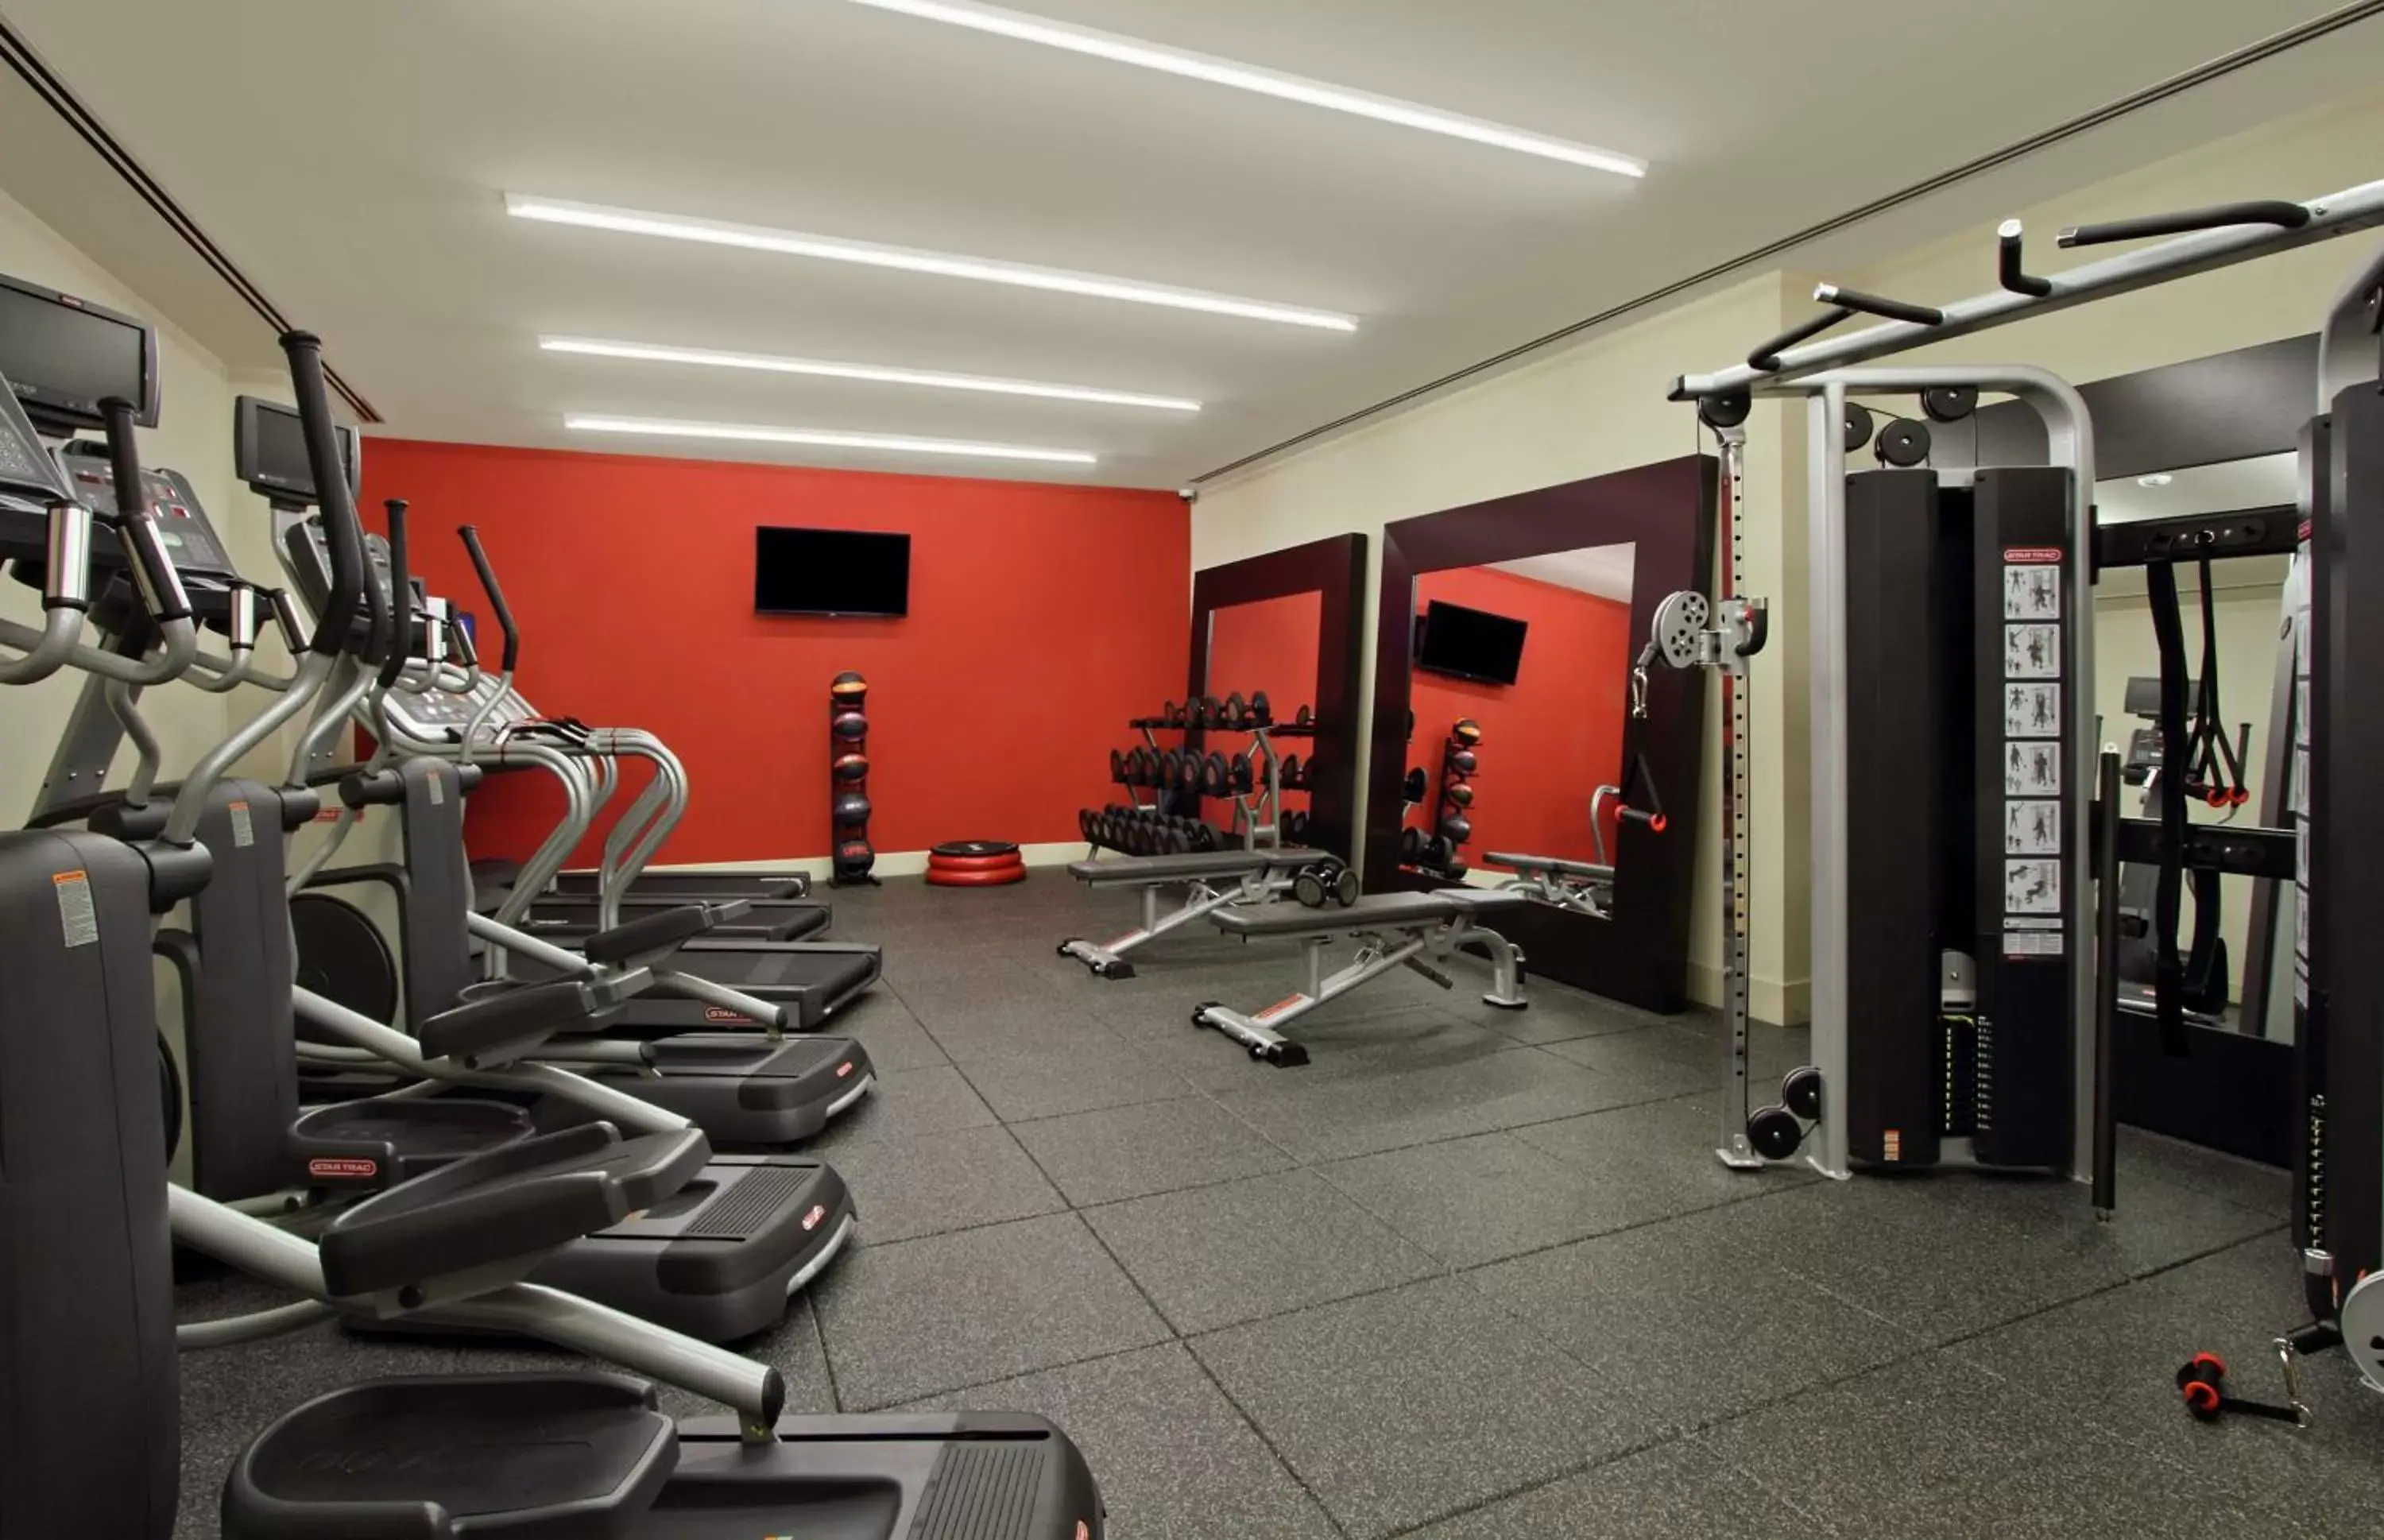 Fitness centre/facilities, Fitness Center/Facilities in Hilton Garden Inn New York/Midtown Park Avenue